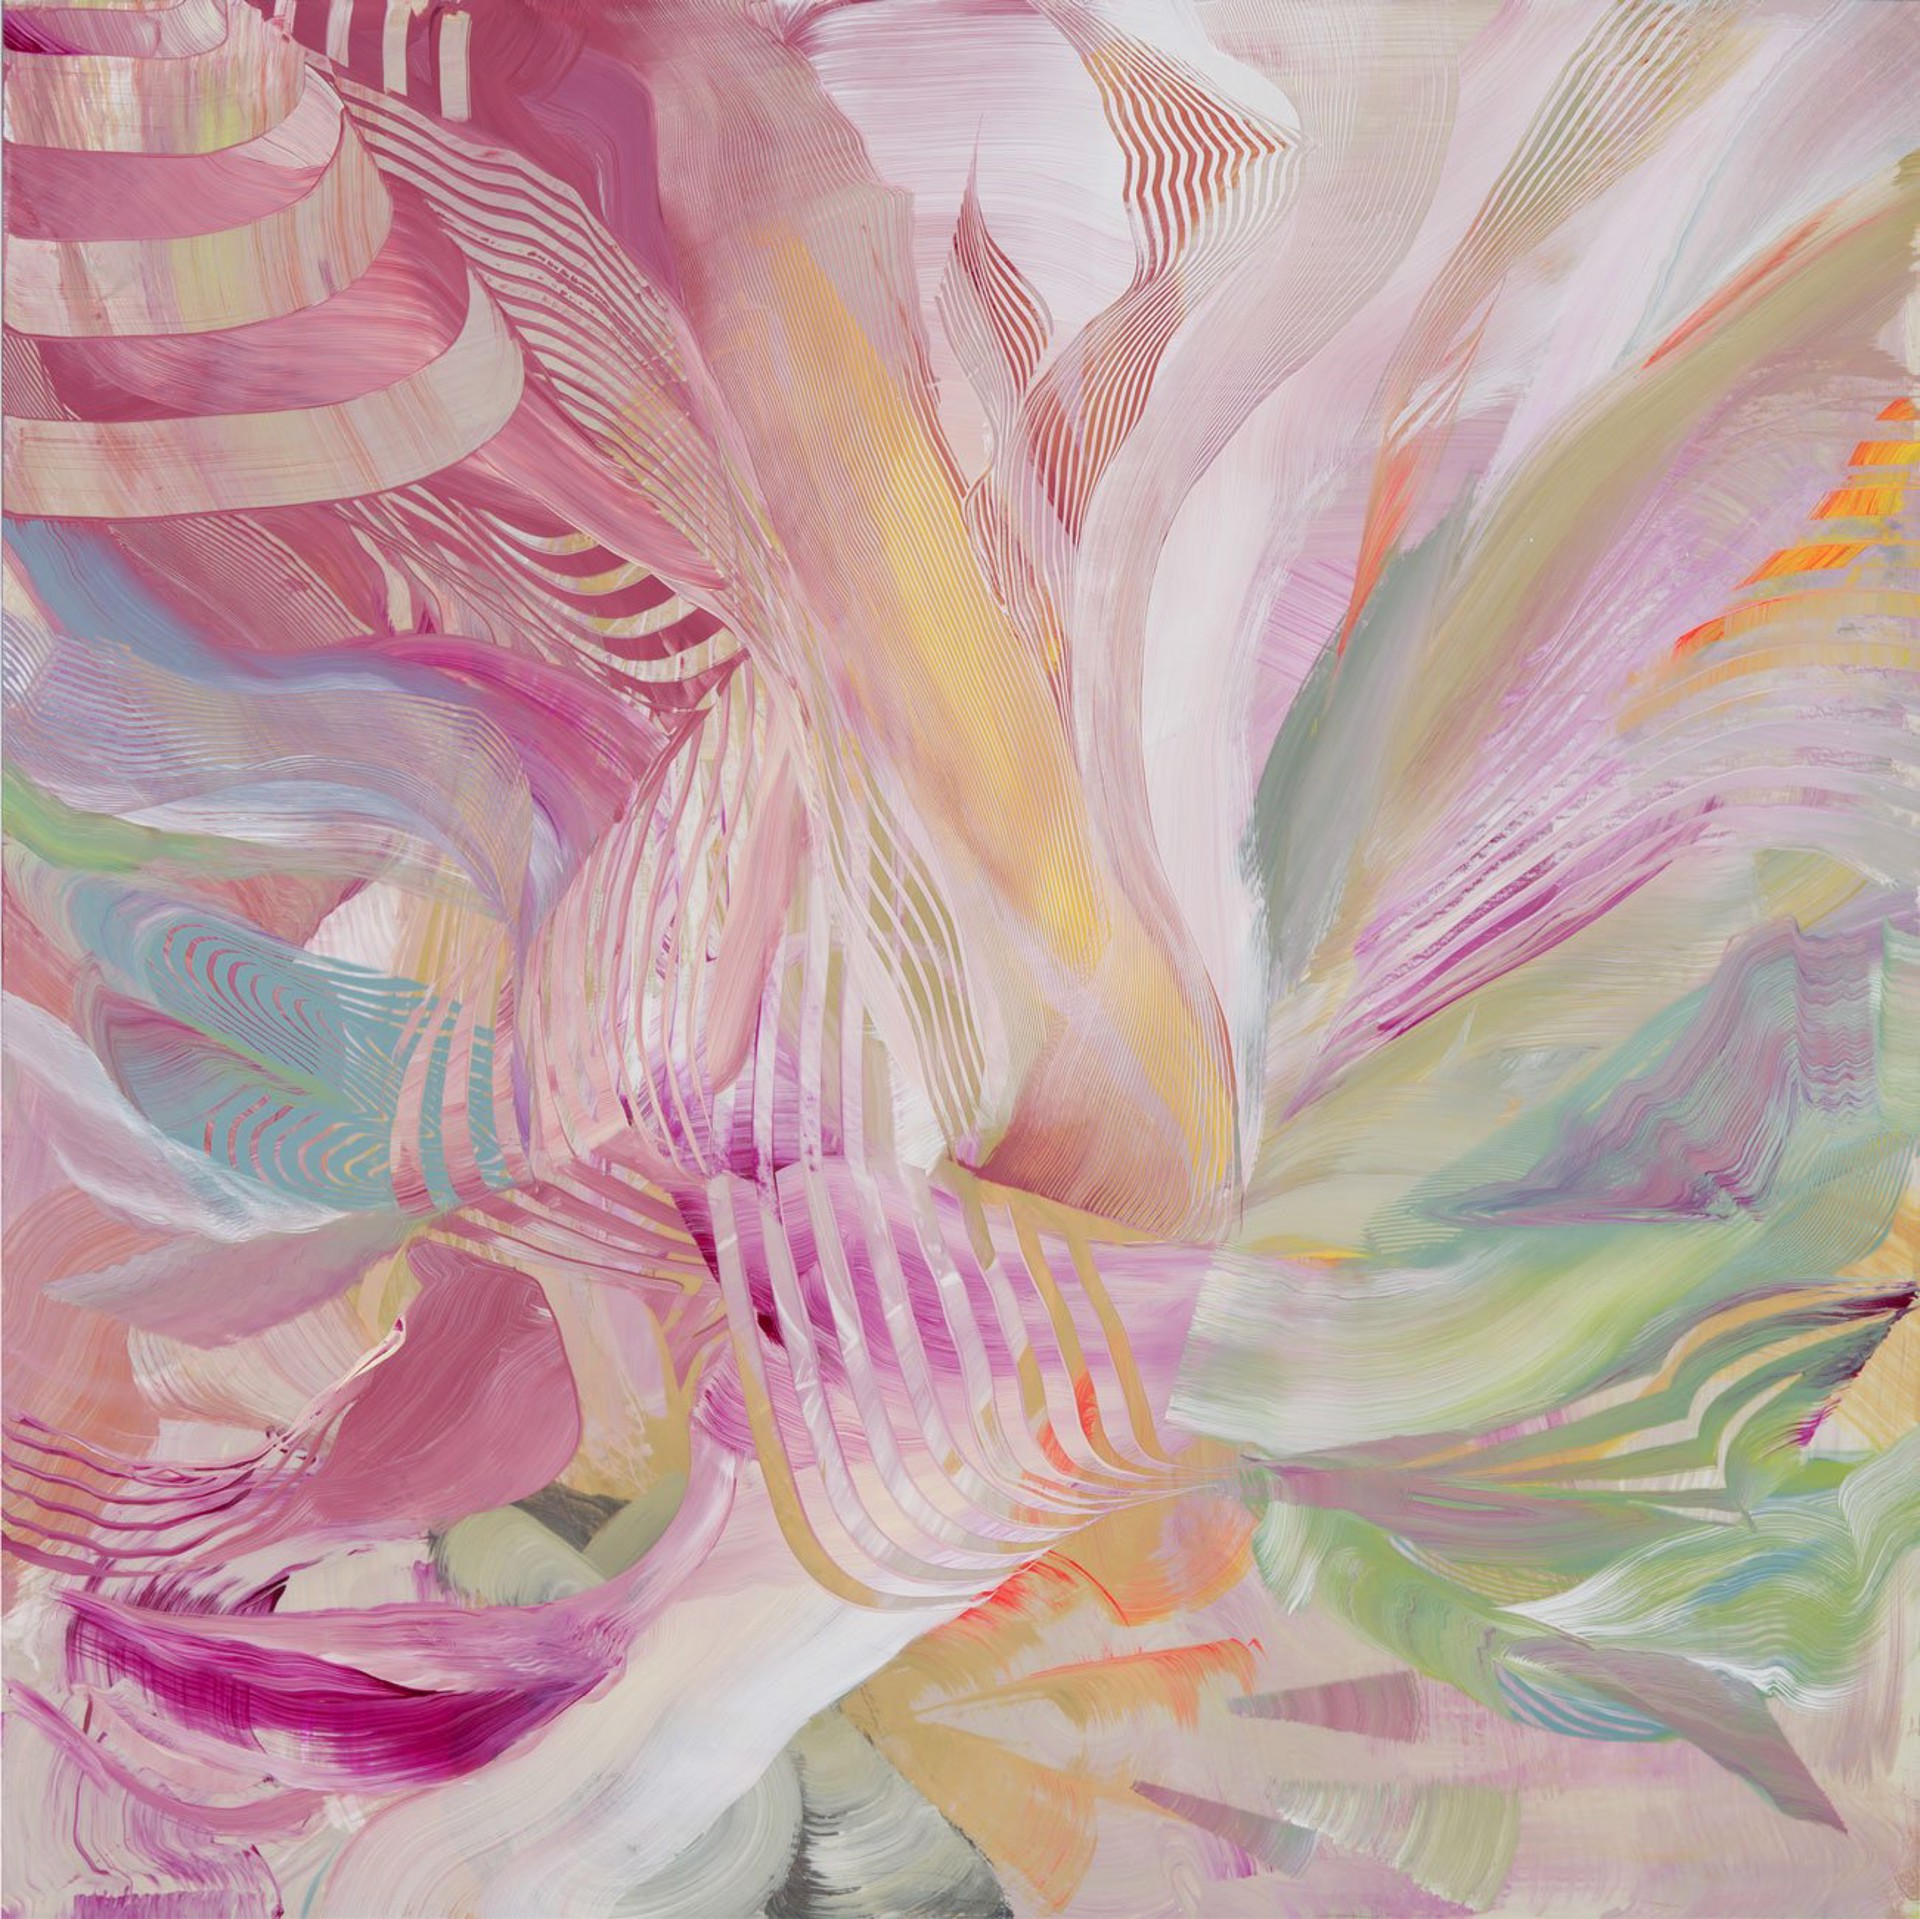 Swirl & Roil by Lorene Anderson